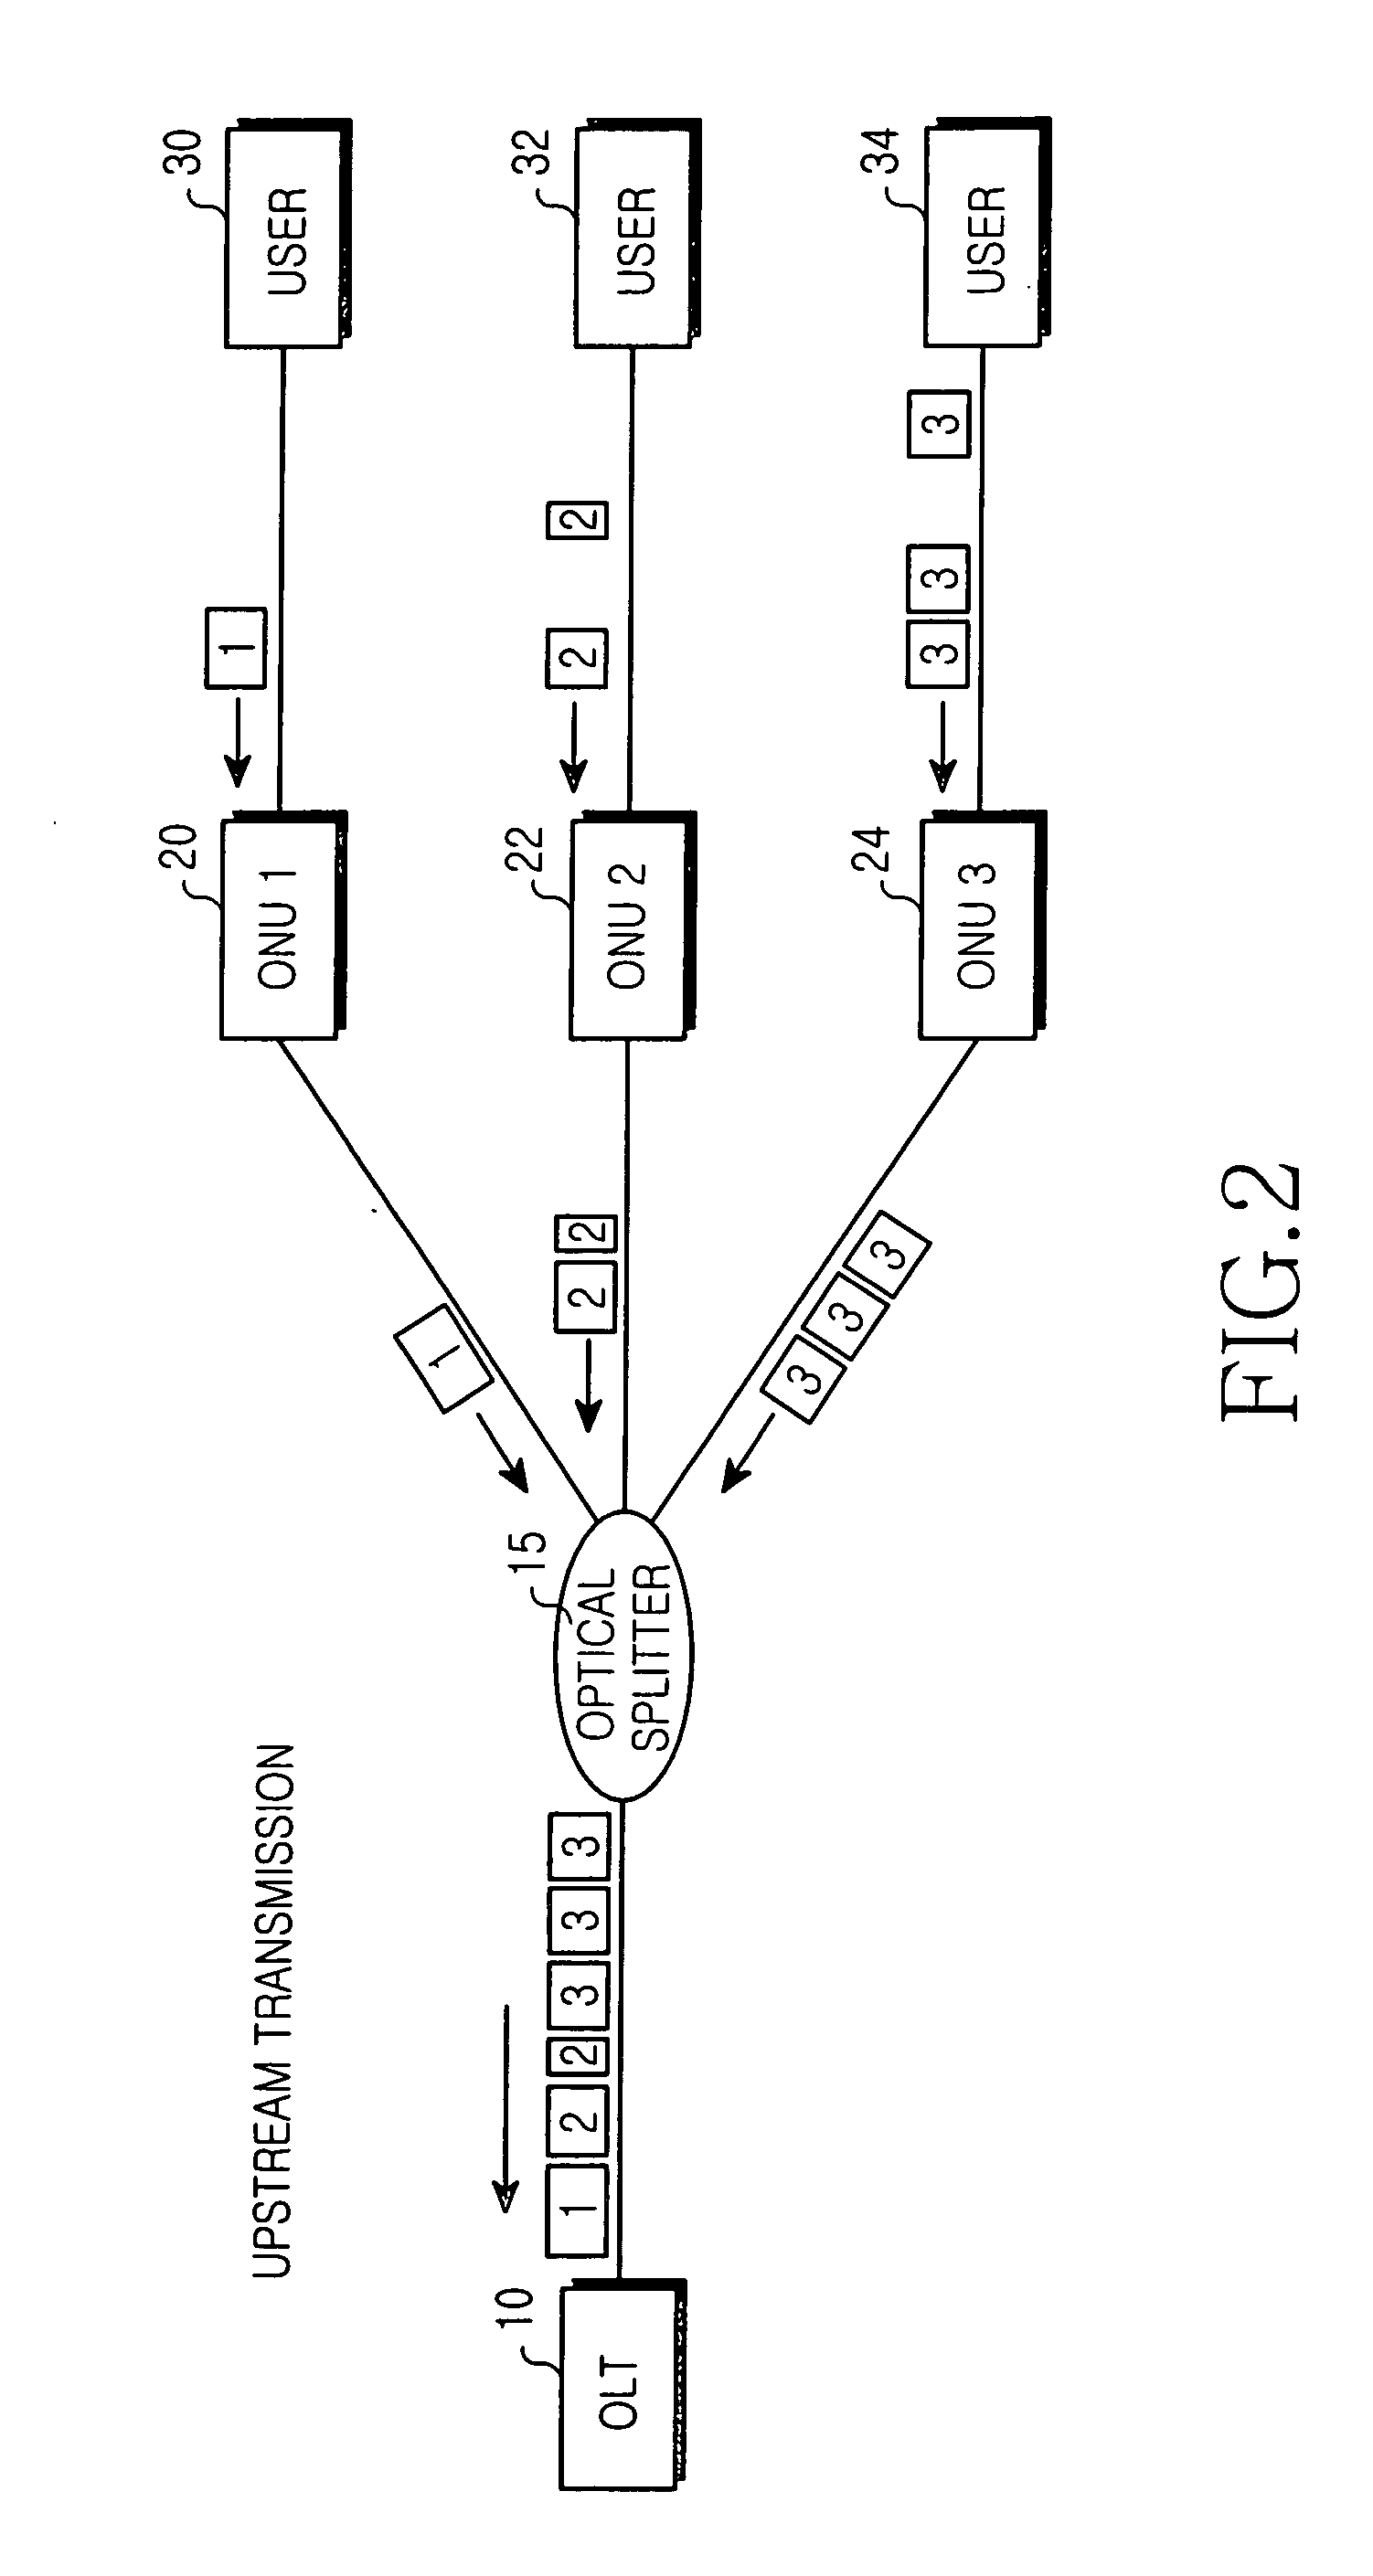 Gigabit Ethernet passive optical network having double link structure